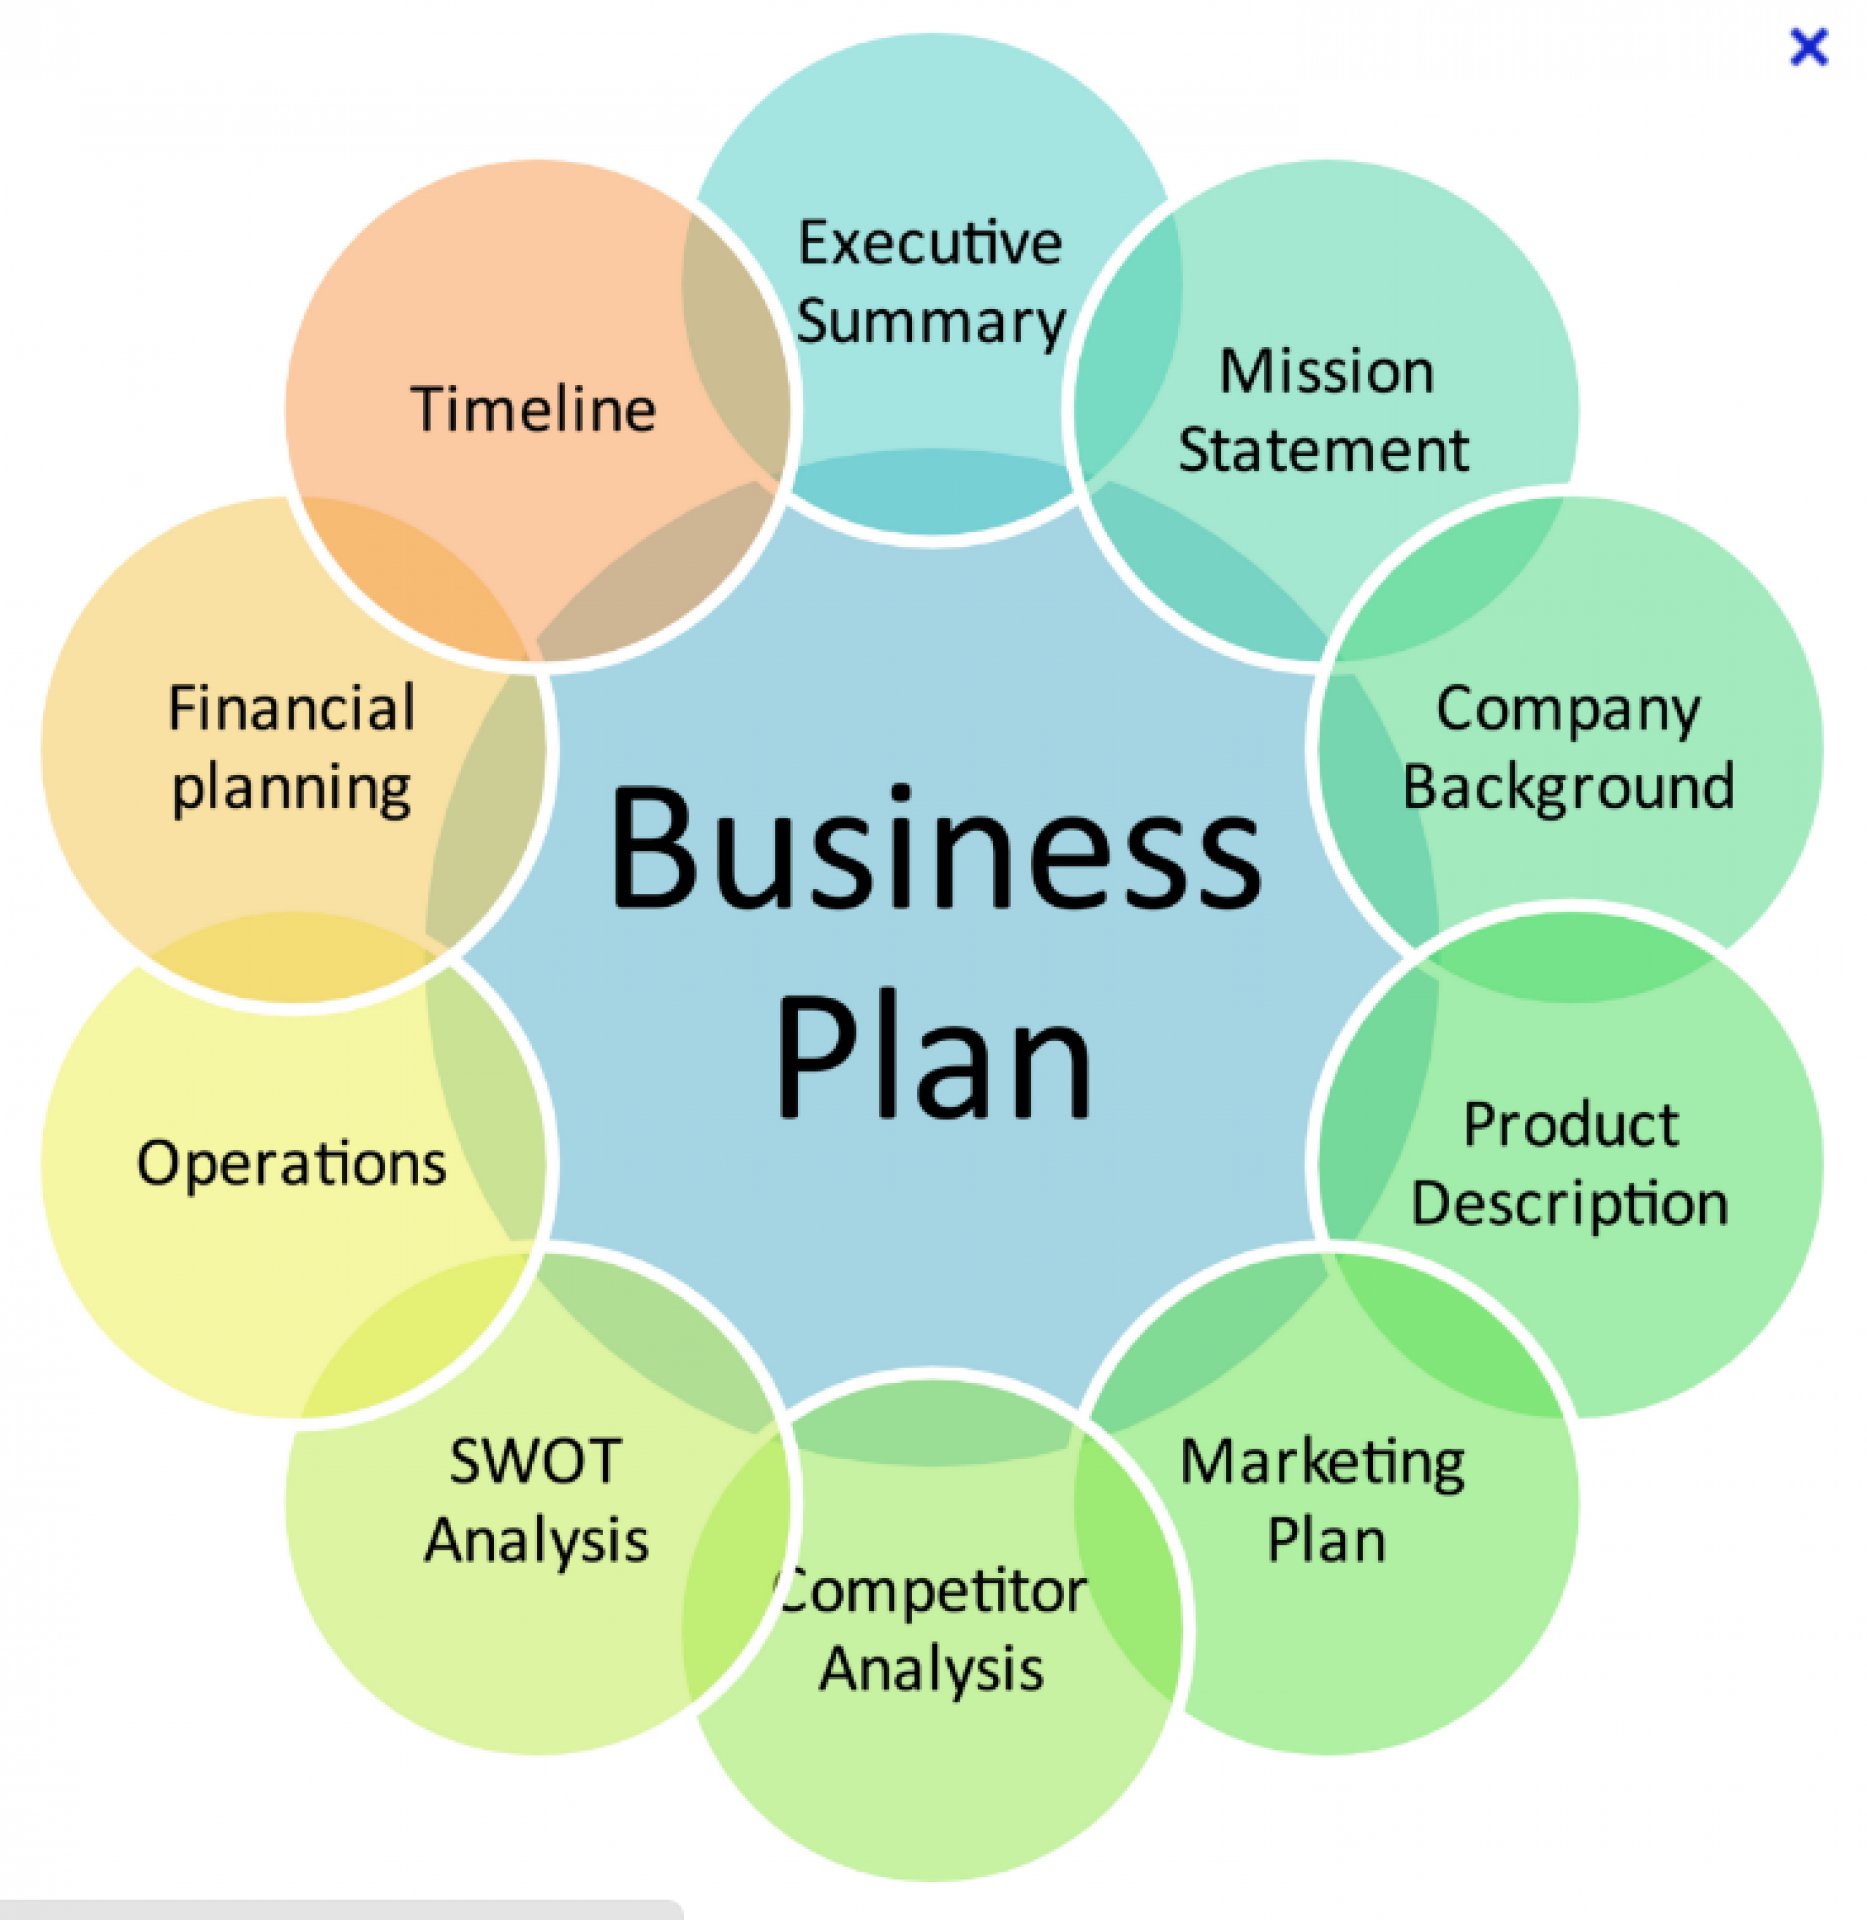 start up innovative business plan